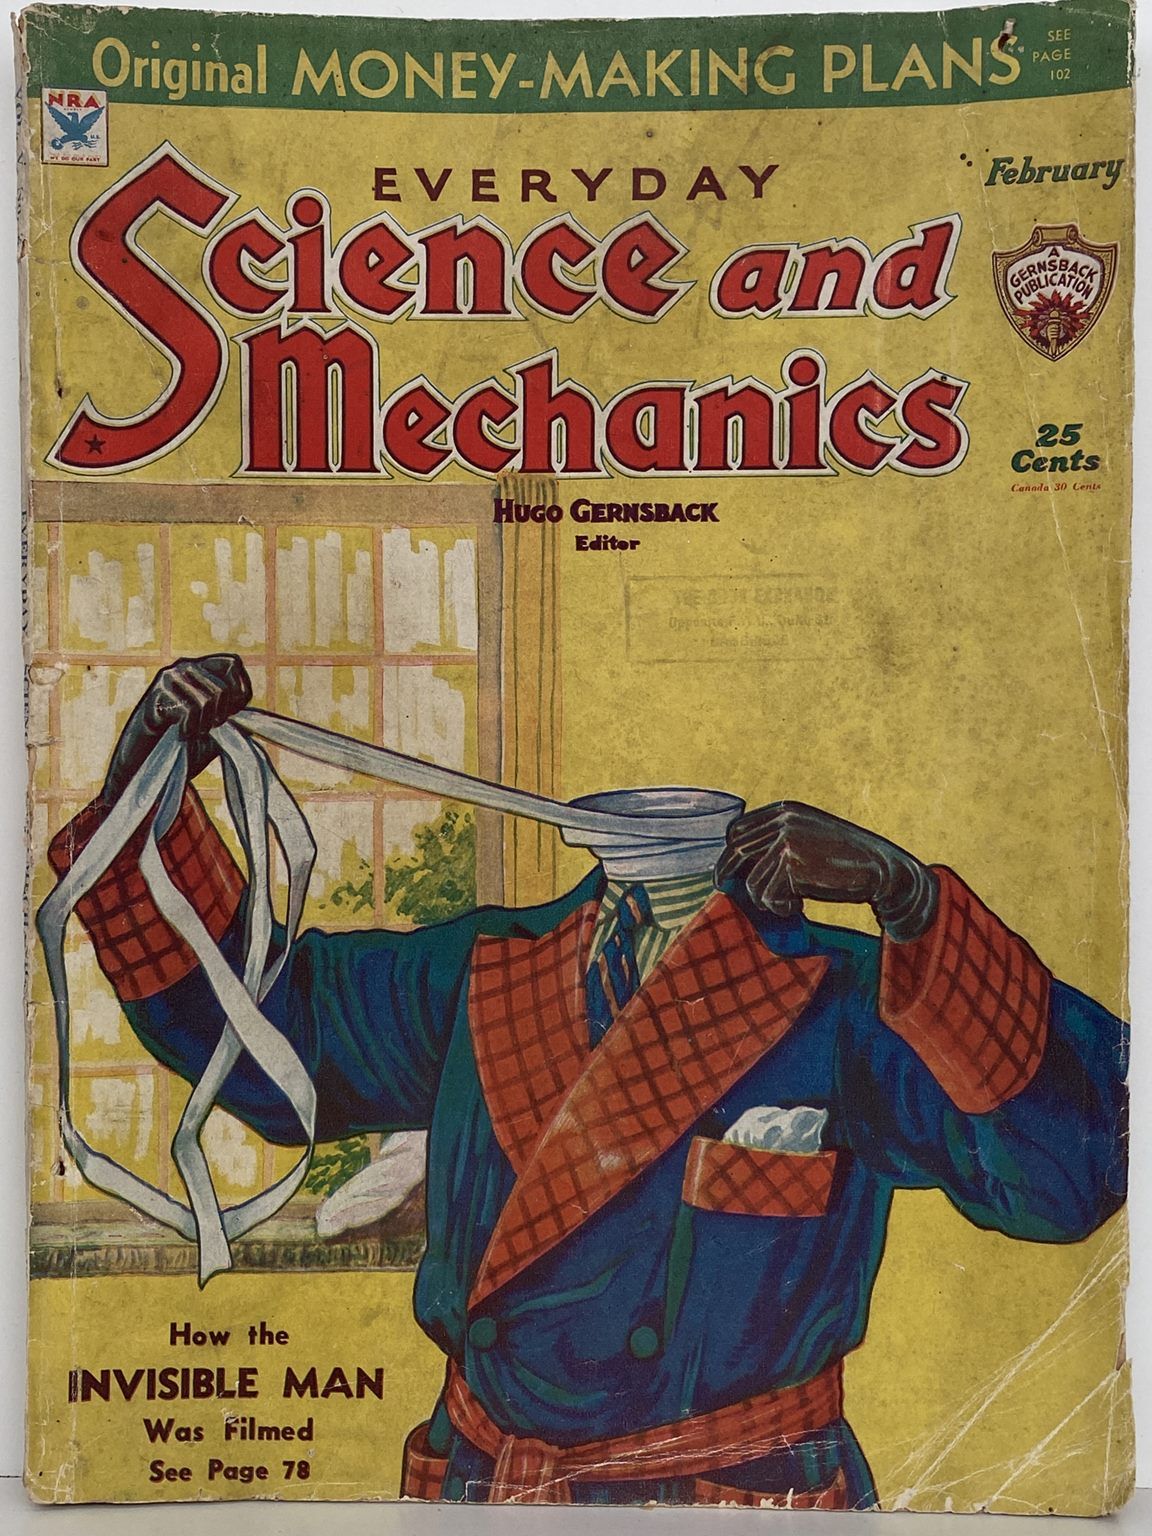 VINTAGE MAGAZINE: Science and Mechanics - February 1934